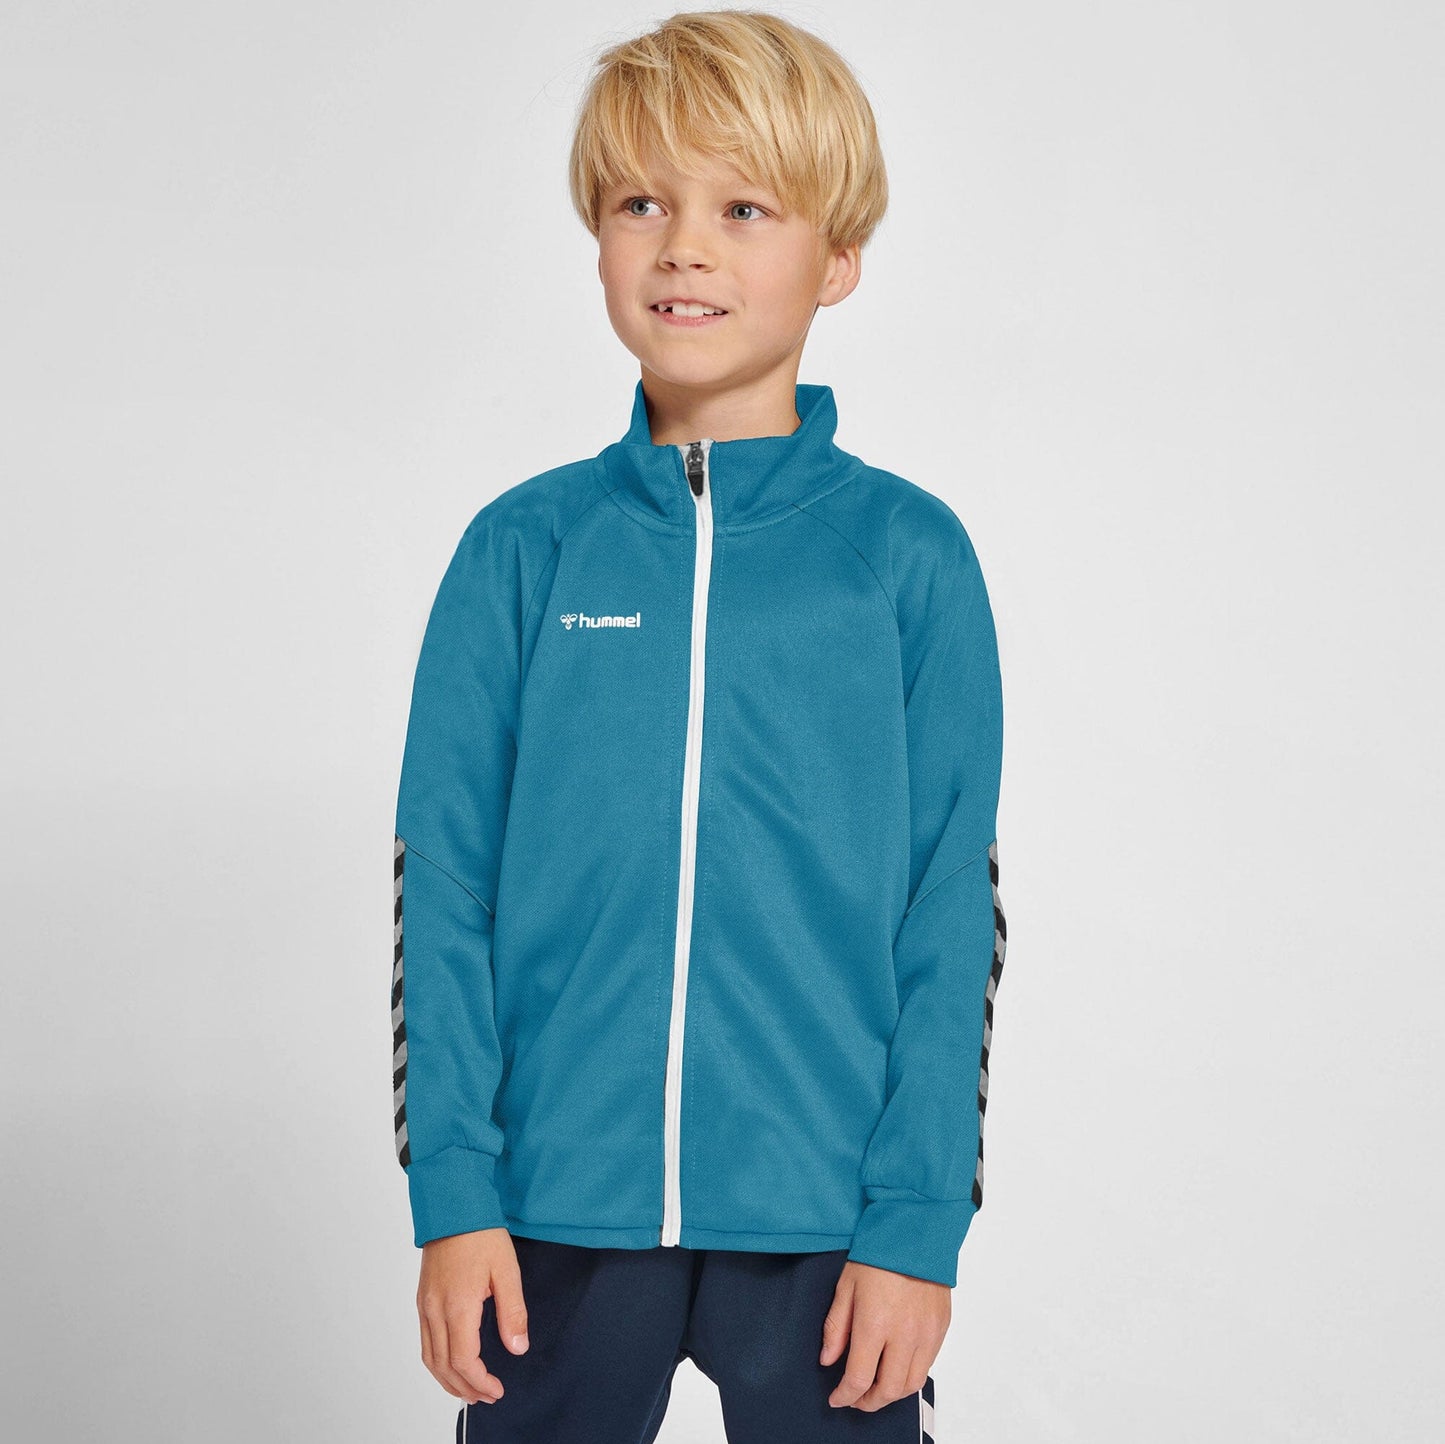 Hummel Boy's Foreman Arrow Printed Sports Zipper Jacket Boy's Jacket HAS Apparel Aqua Blue 4 Years 